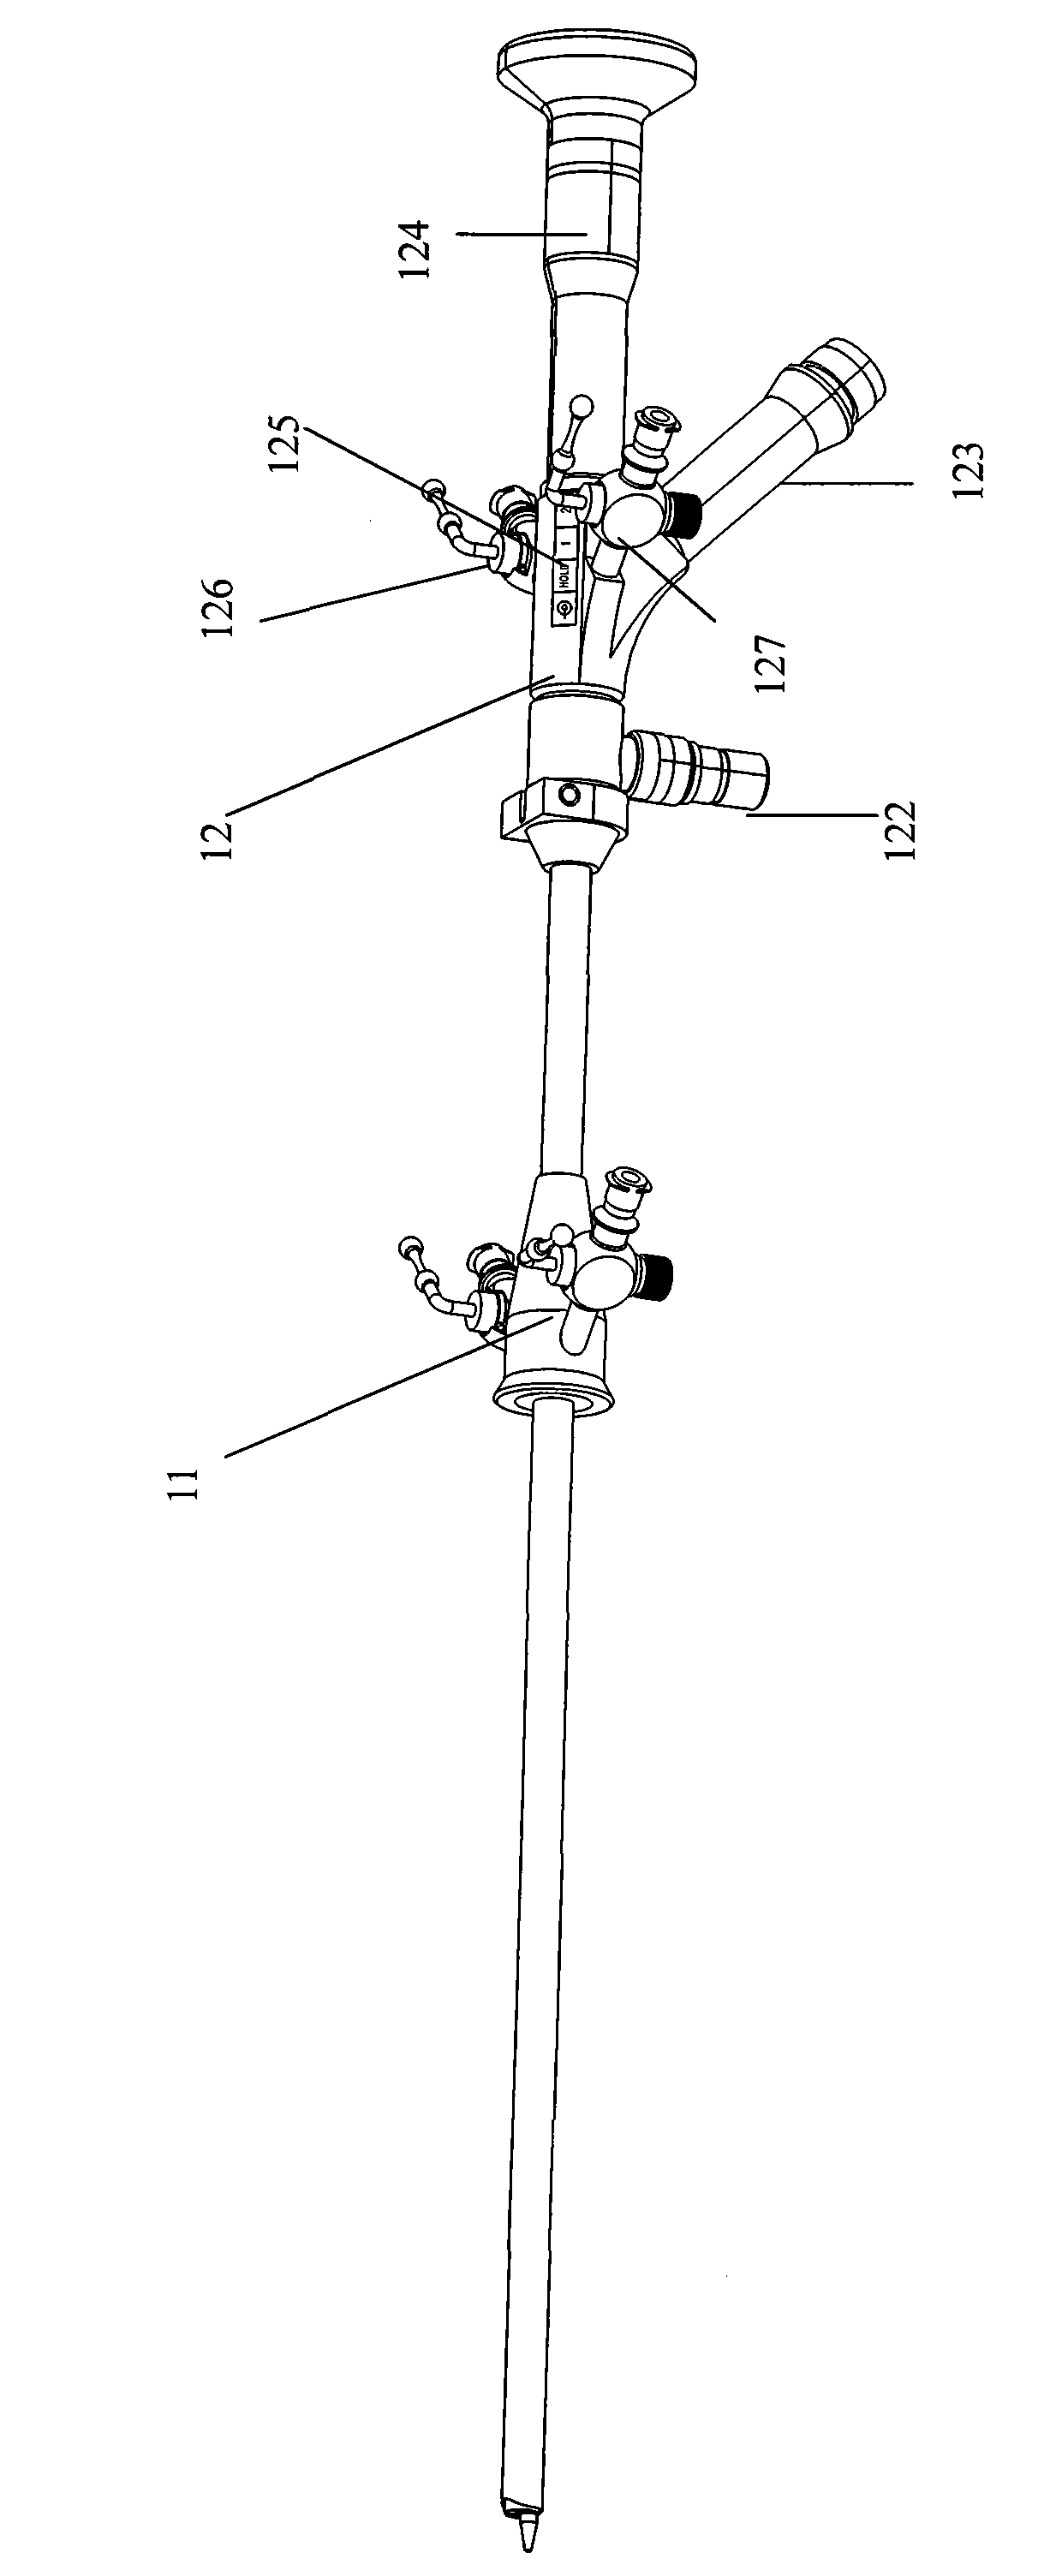 Integral hard ultrasonic hysteroscope system